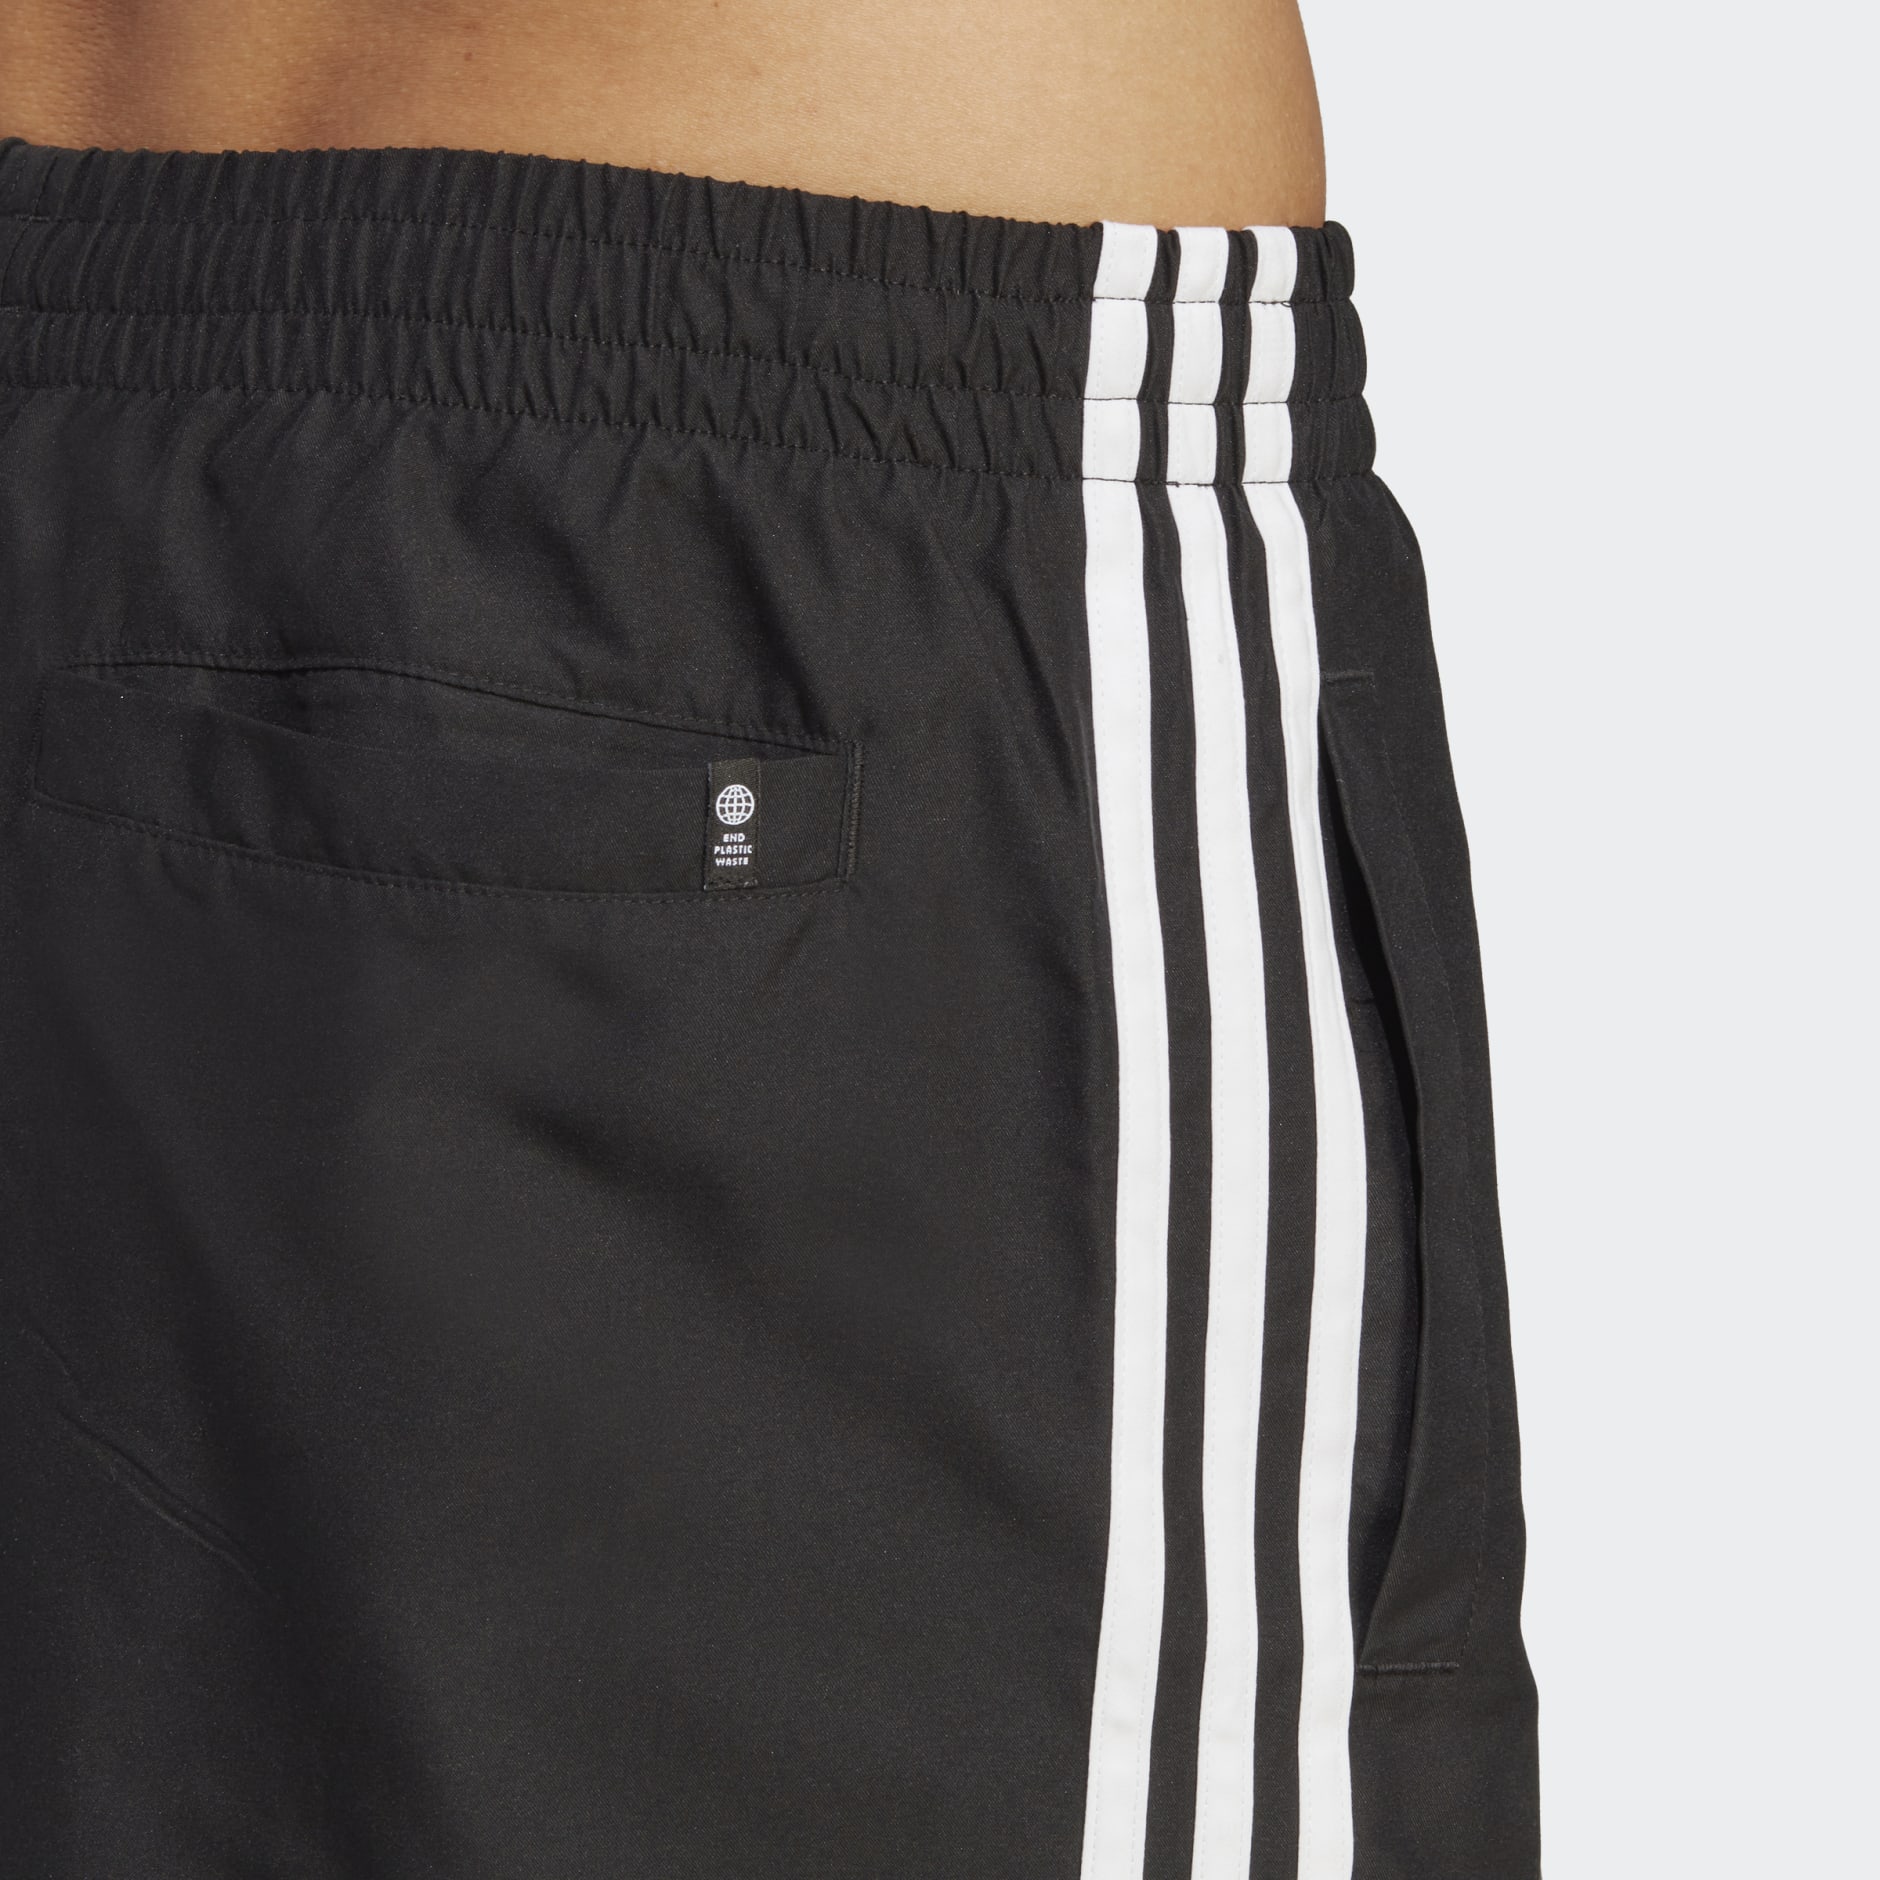 Shorts Adidas Adicolor Classics 3-stripes Preto/Branco - NewSkull